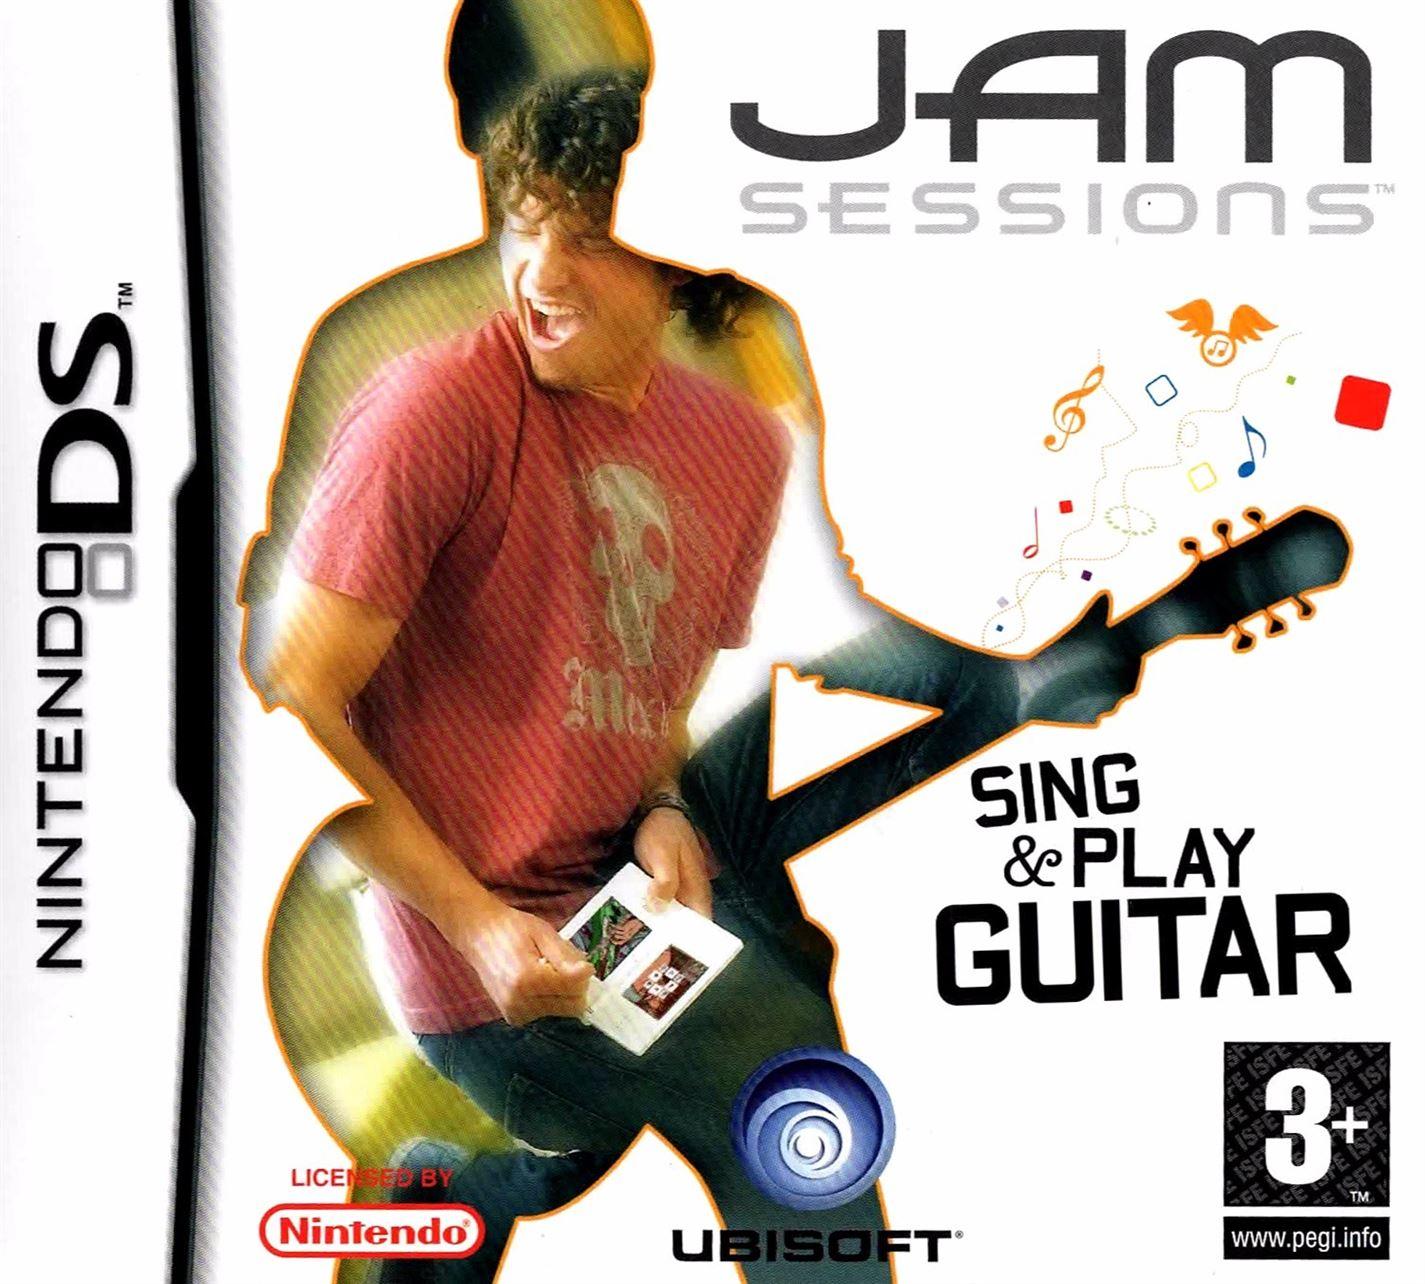 Jam Sessions DS (Nintendo DS) - UK Seller NP